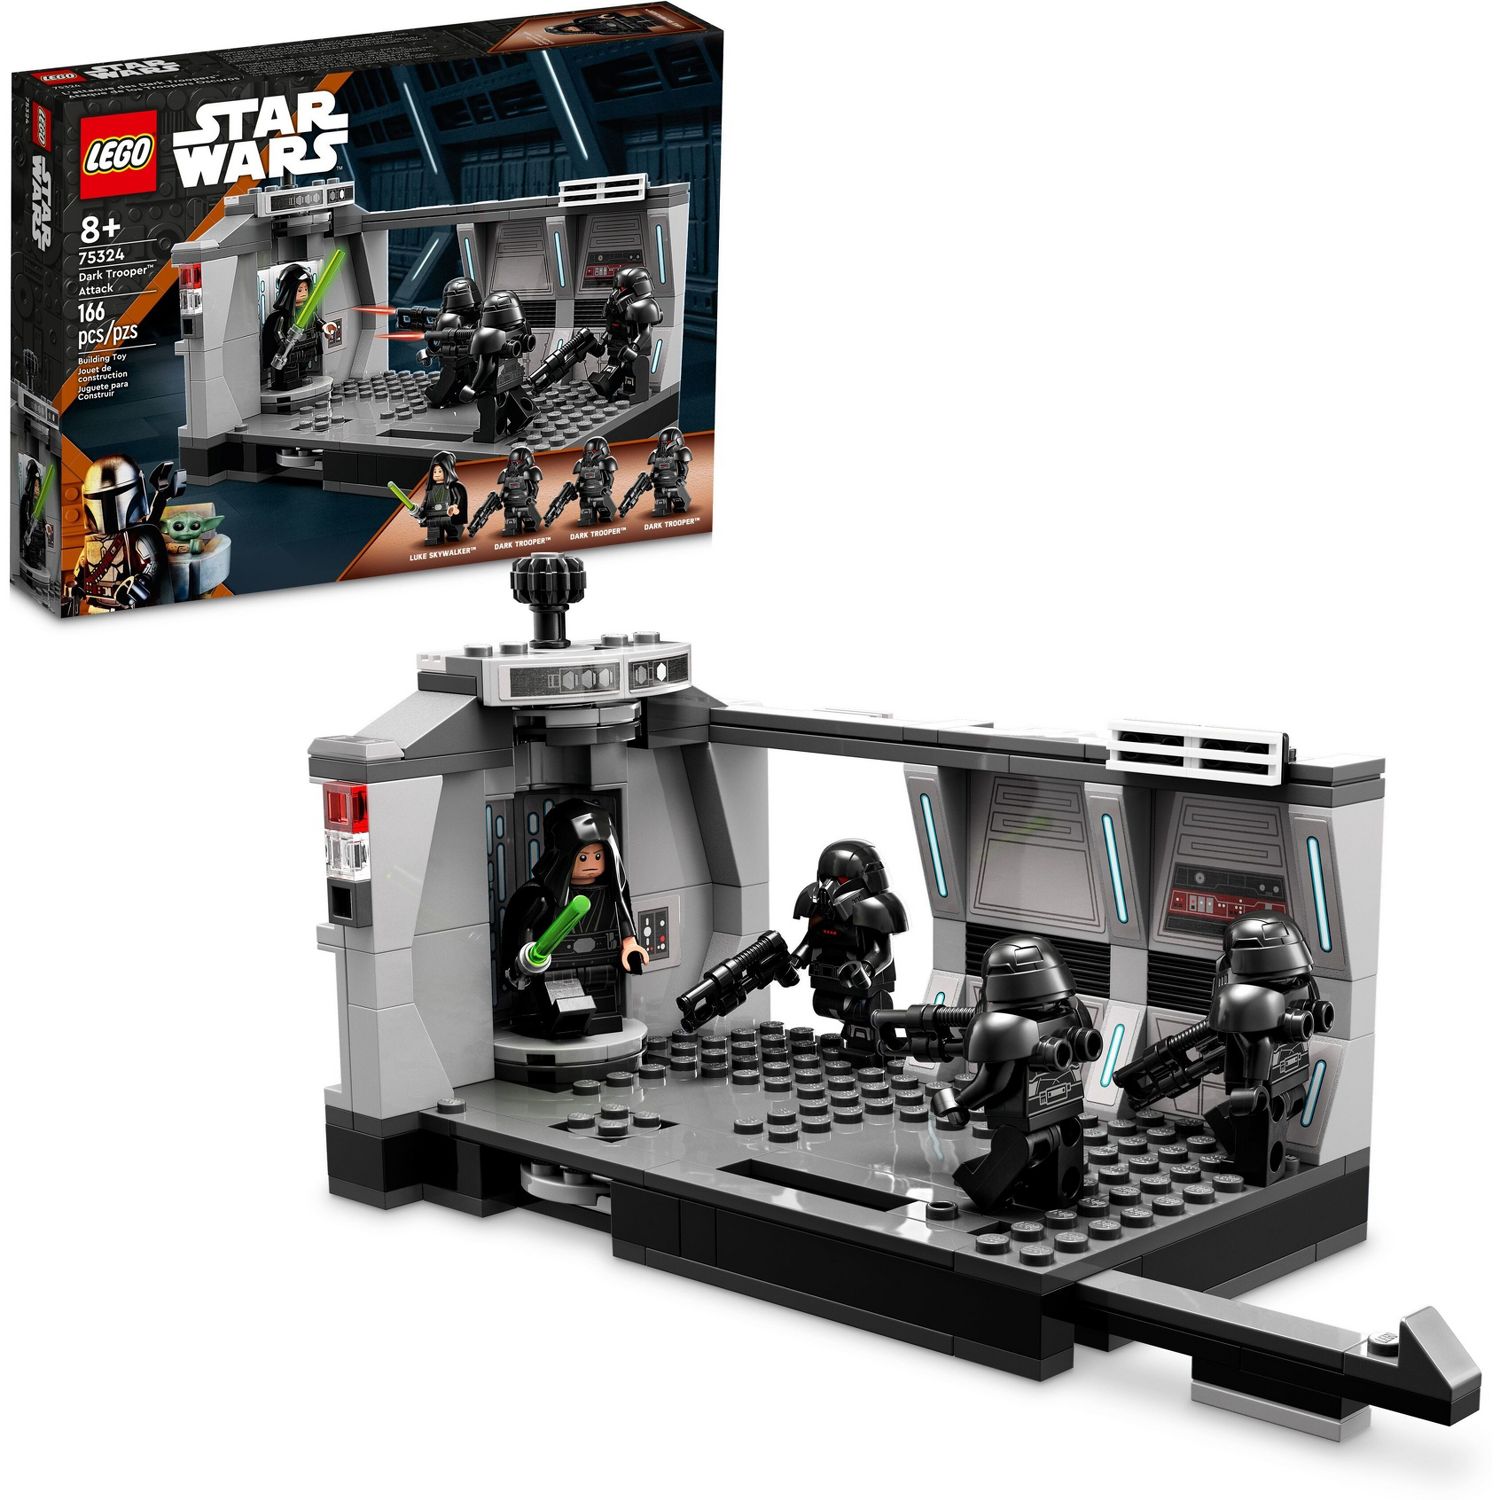 LEGO Star Wars Dark Trooper Attack Mandalorian Set with Luke Skywalker 75324 $22.94 Target YMMV